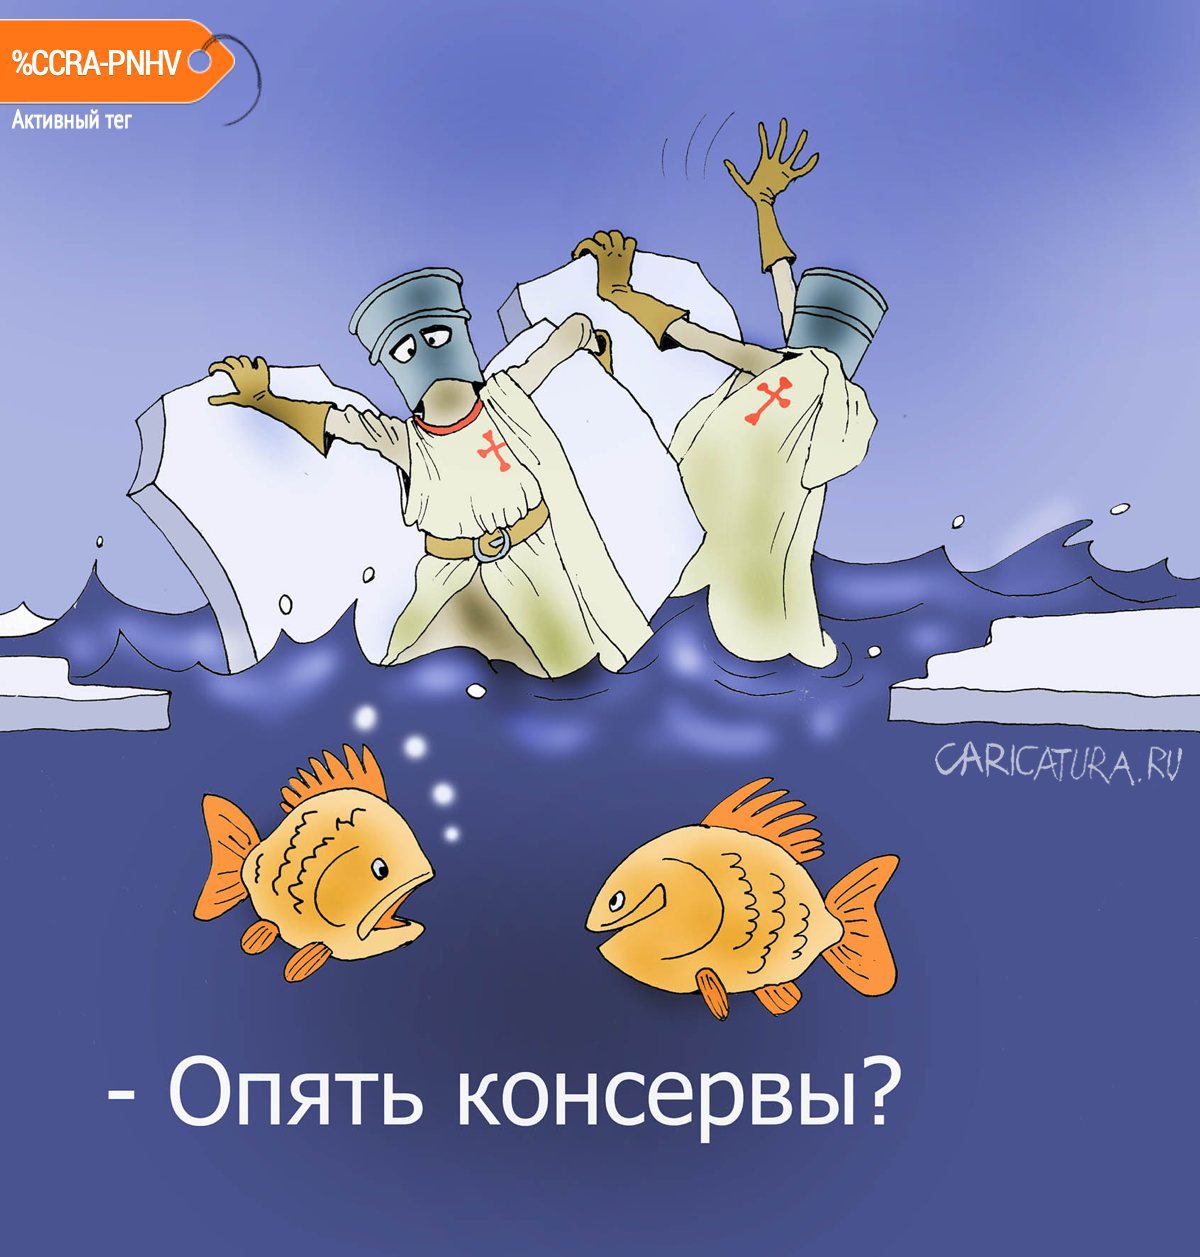 Карикатура "Ледовое шоу", Александр Попов